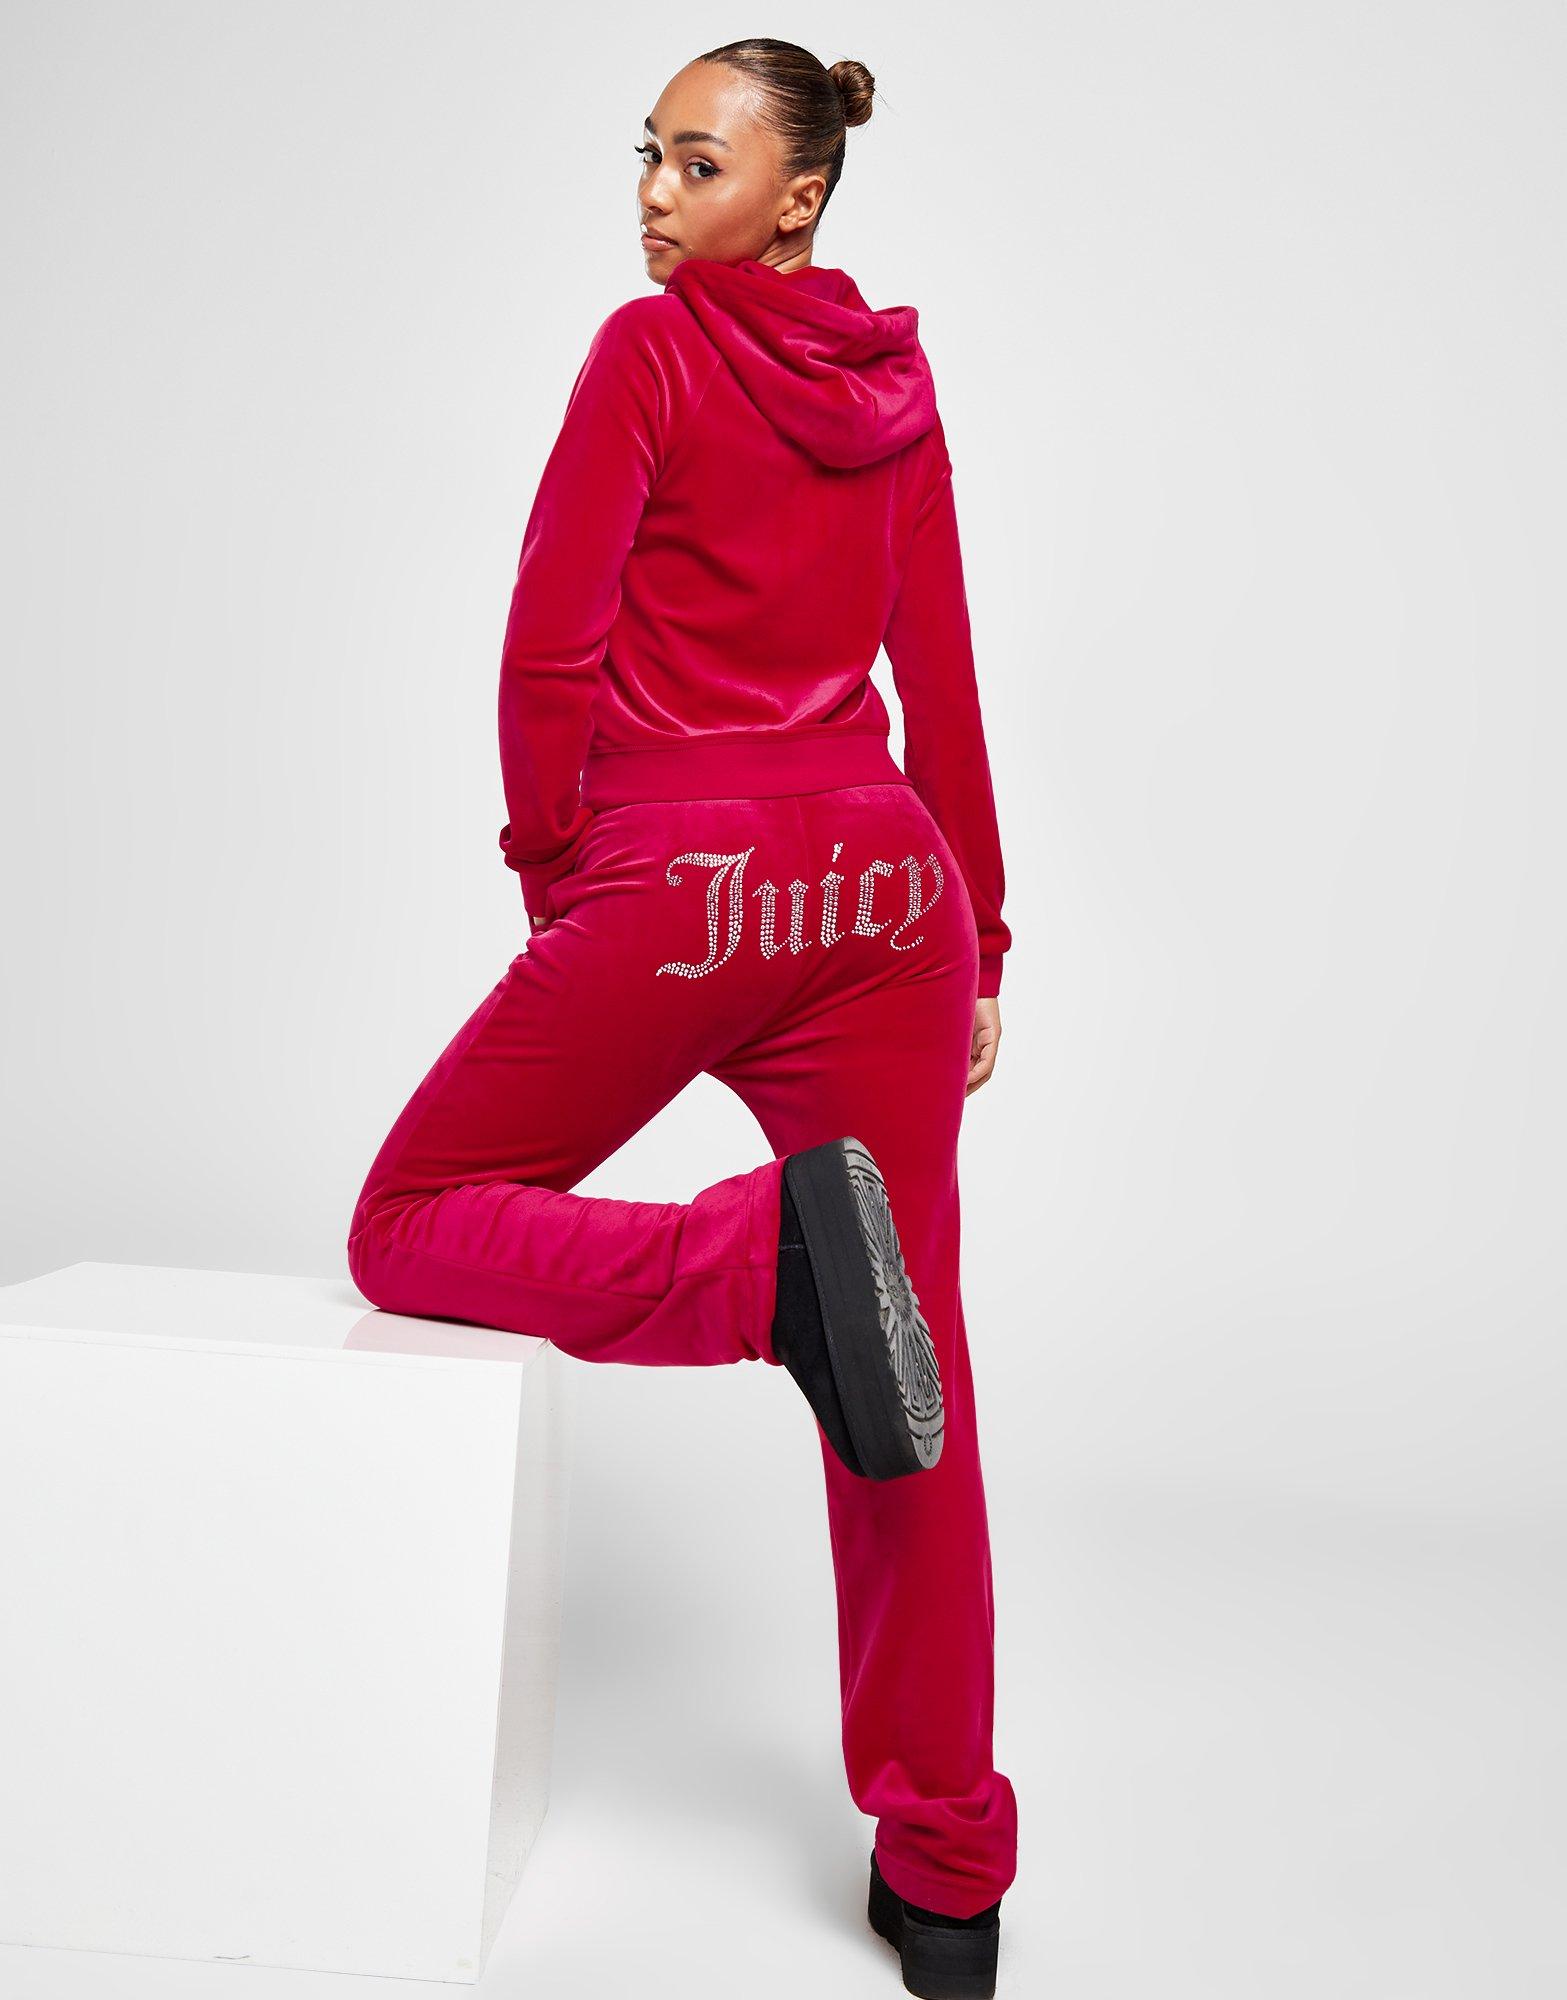 juicy velour pants  Juicy couture tracksuit, Juicy couture, Juicy